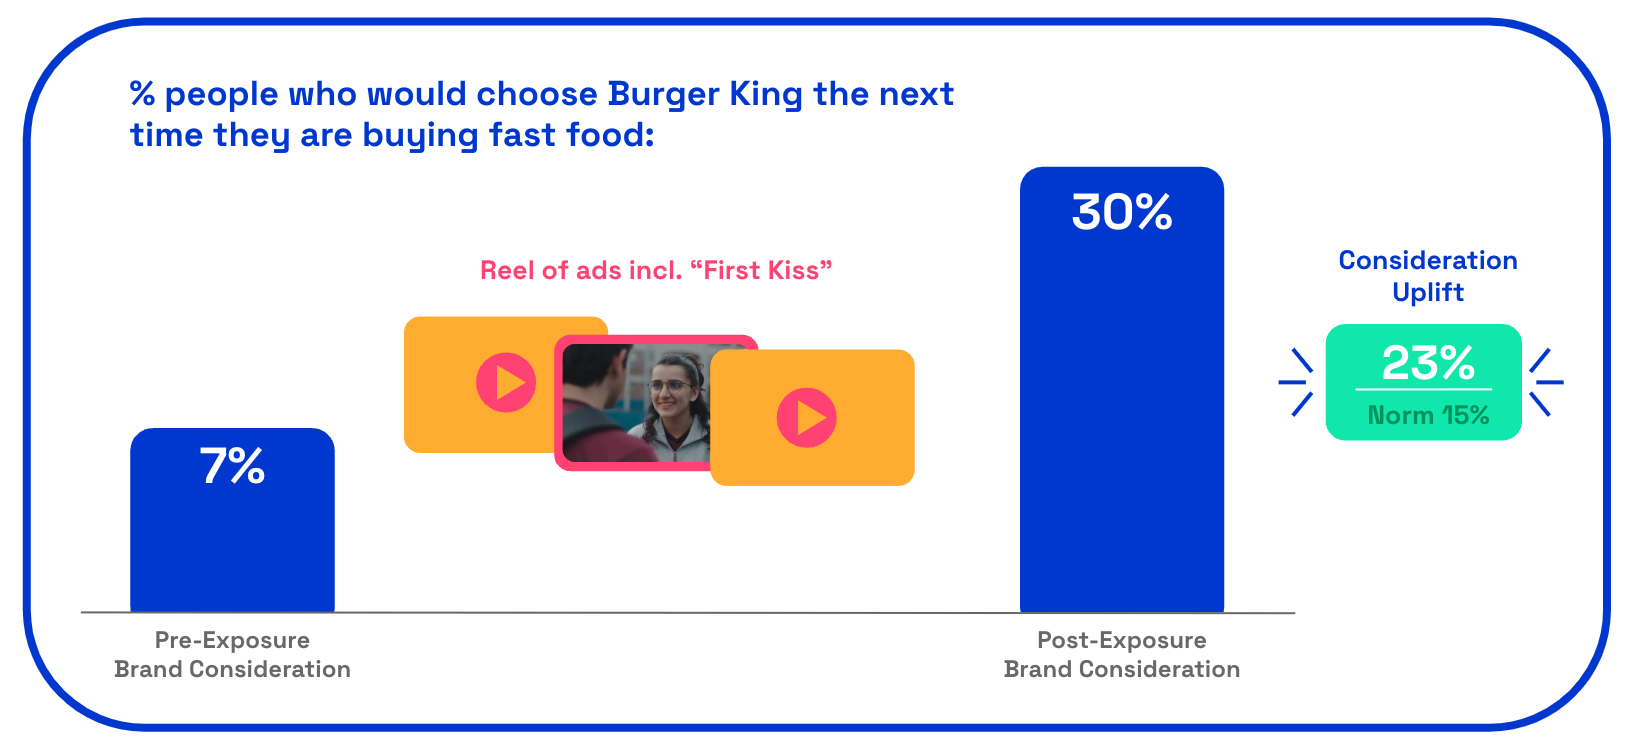 Burger King first kiss brand consideration scores